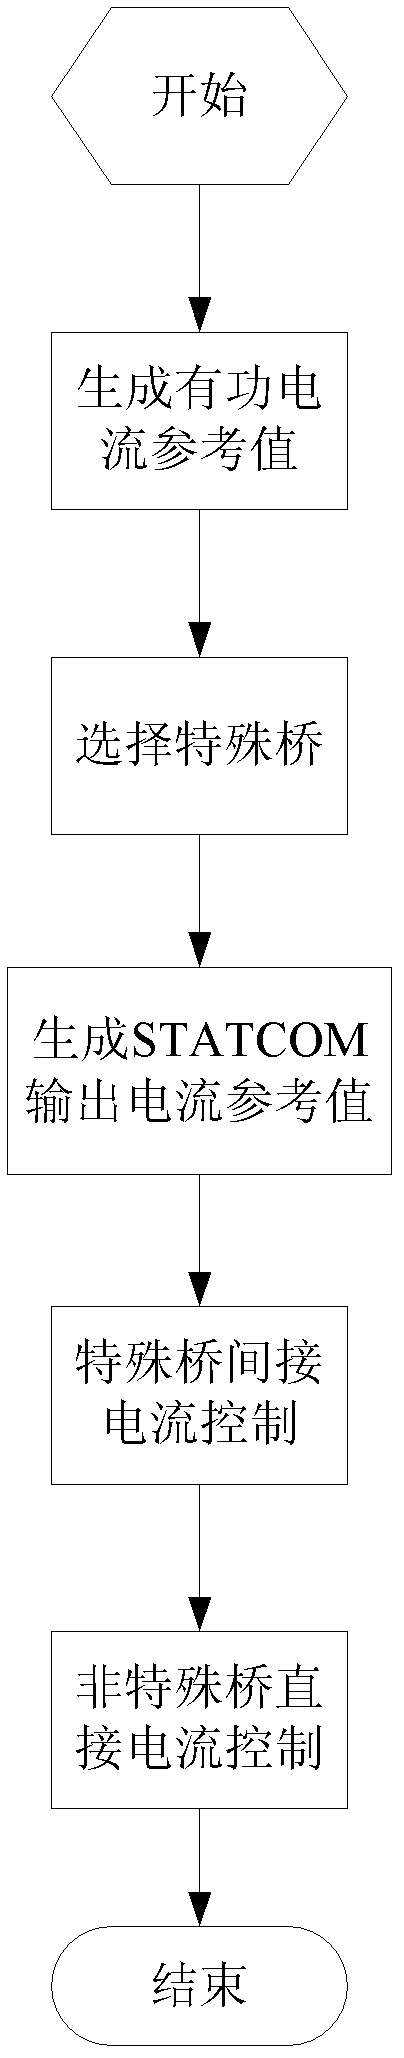 Cascading-type STATCOM DC side capacitor voltage balance control method